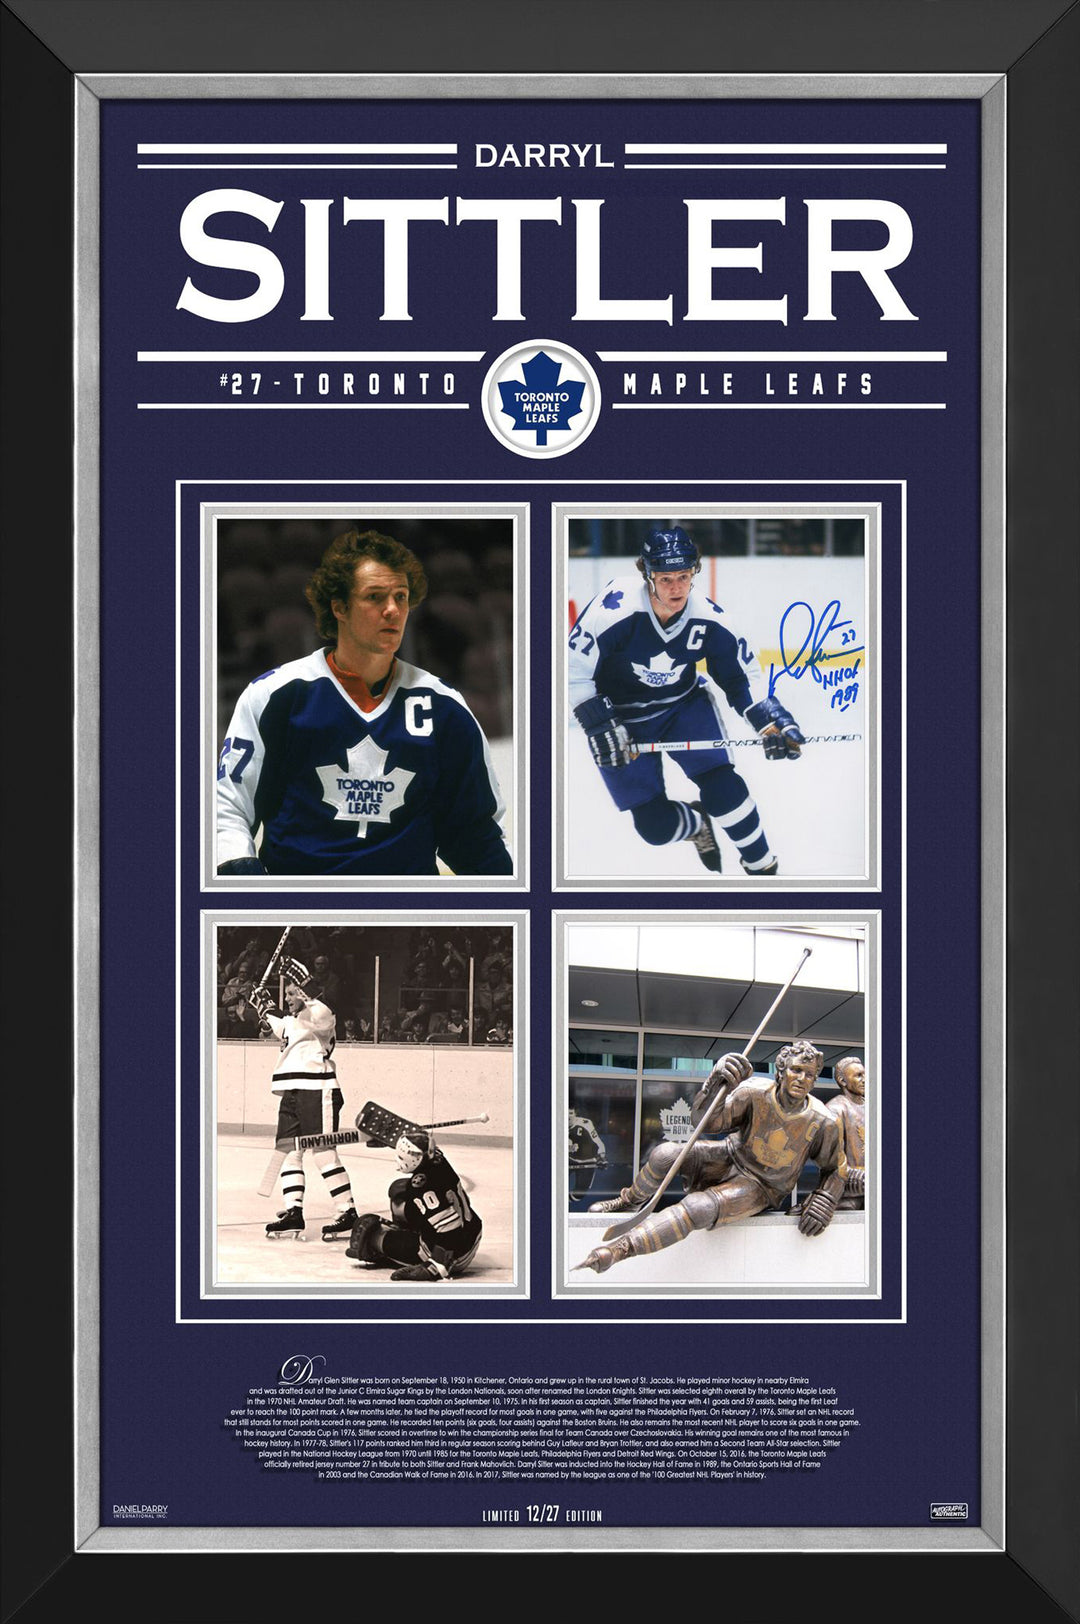 Darryl Sittler Framed Signed Photo Ltd Ed Of 27 Toronto Maple Leafs, Toronto Maple Leafs, NHL, Hockey, Autographed, Signed, AACMH32938